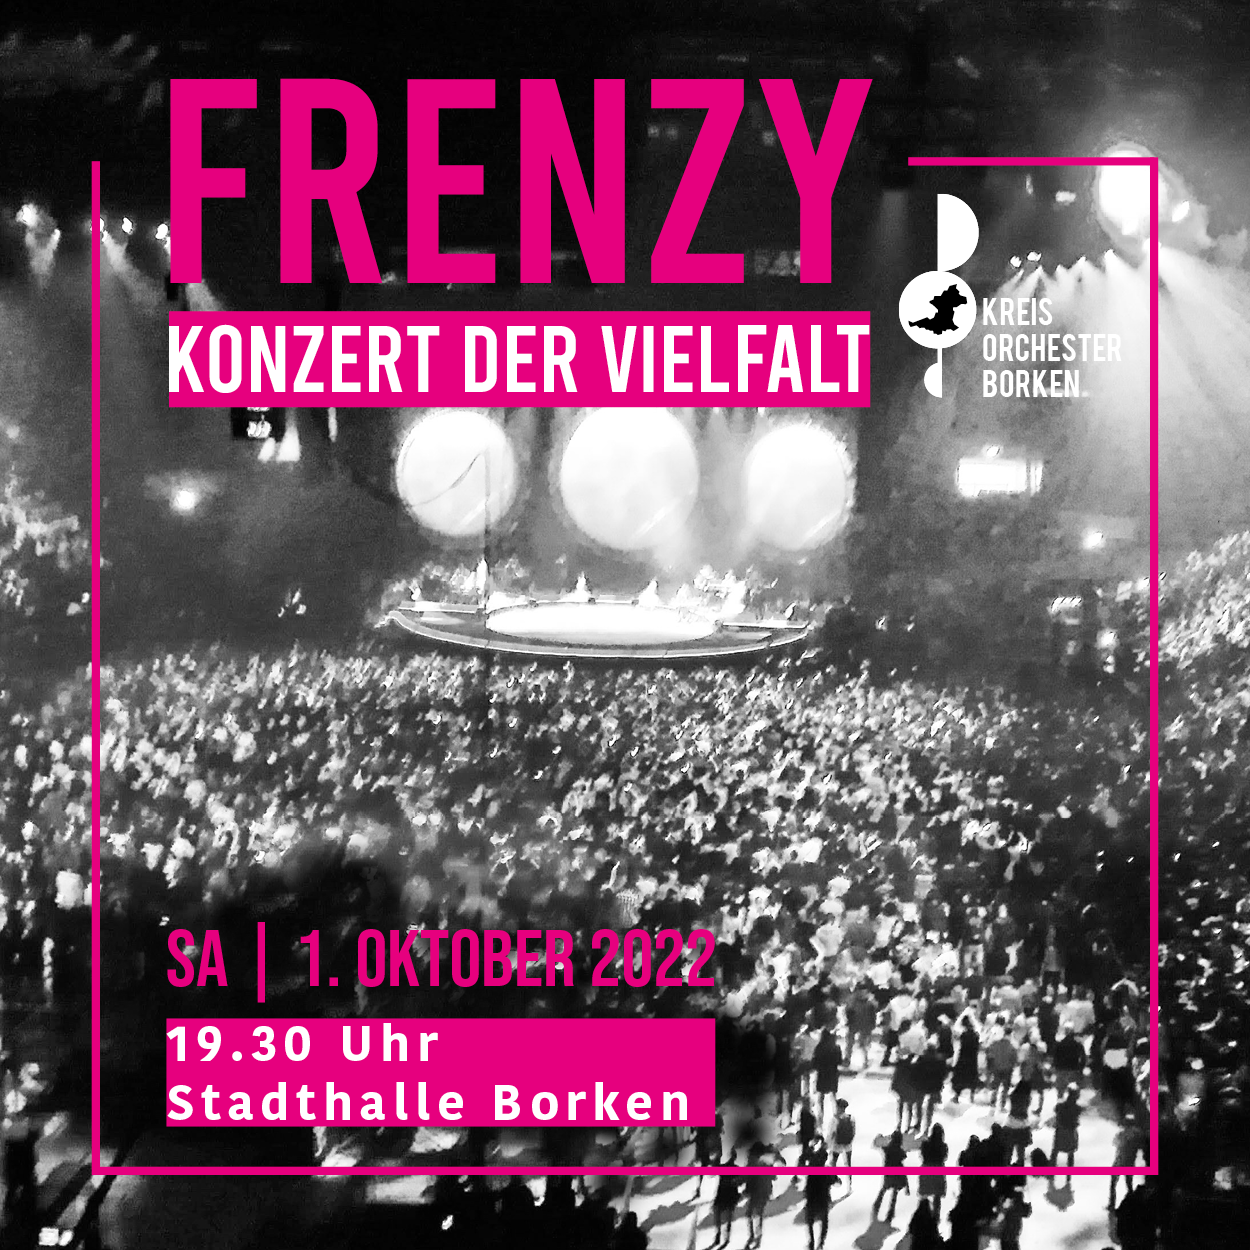 Frenzy KOnzert 1. Oktober 2022 Kreisorchester Borken KOB